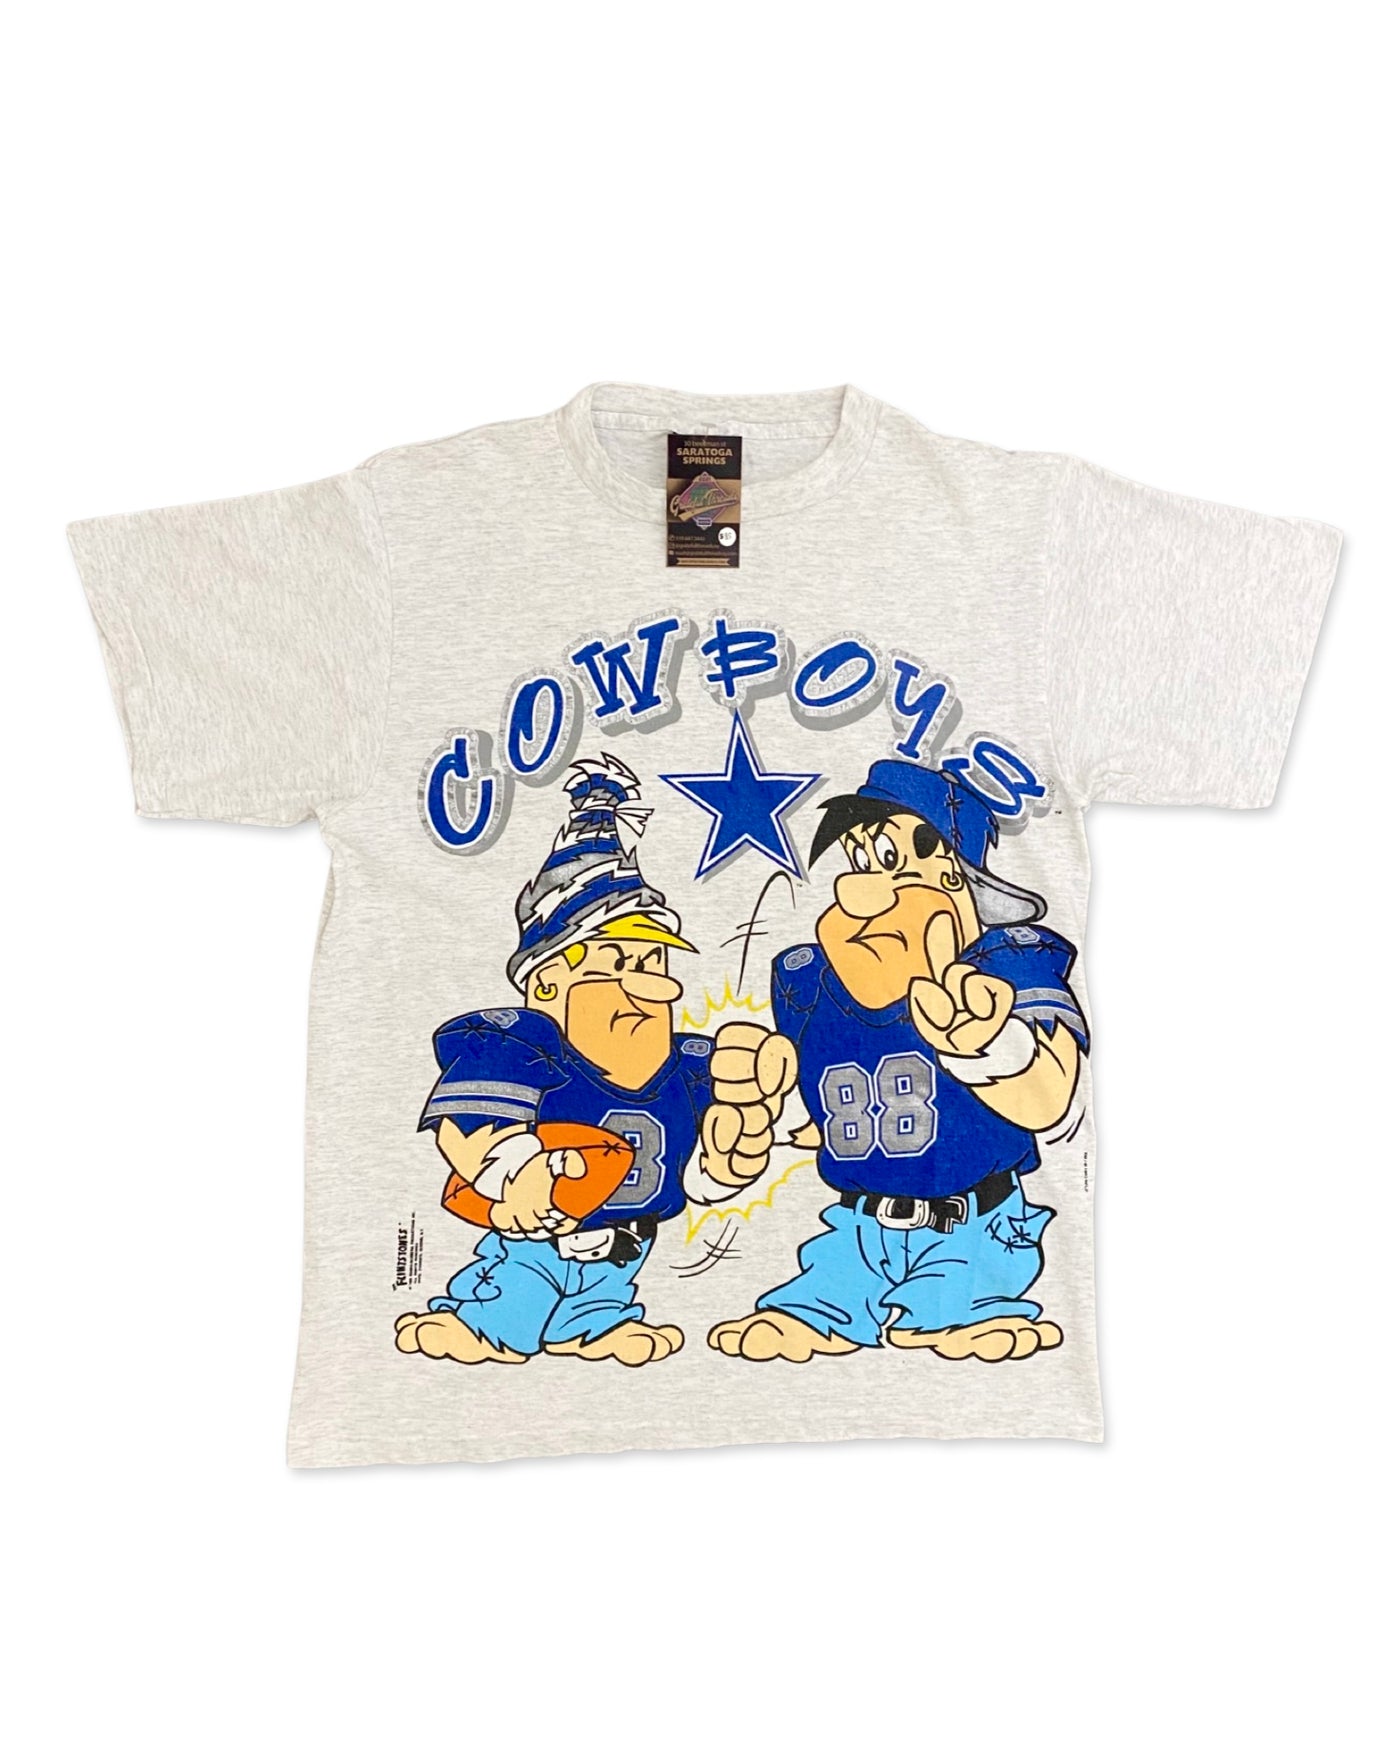 Vintage 1993 Flintstones Dallas Cowboys T-Shirt